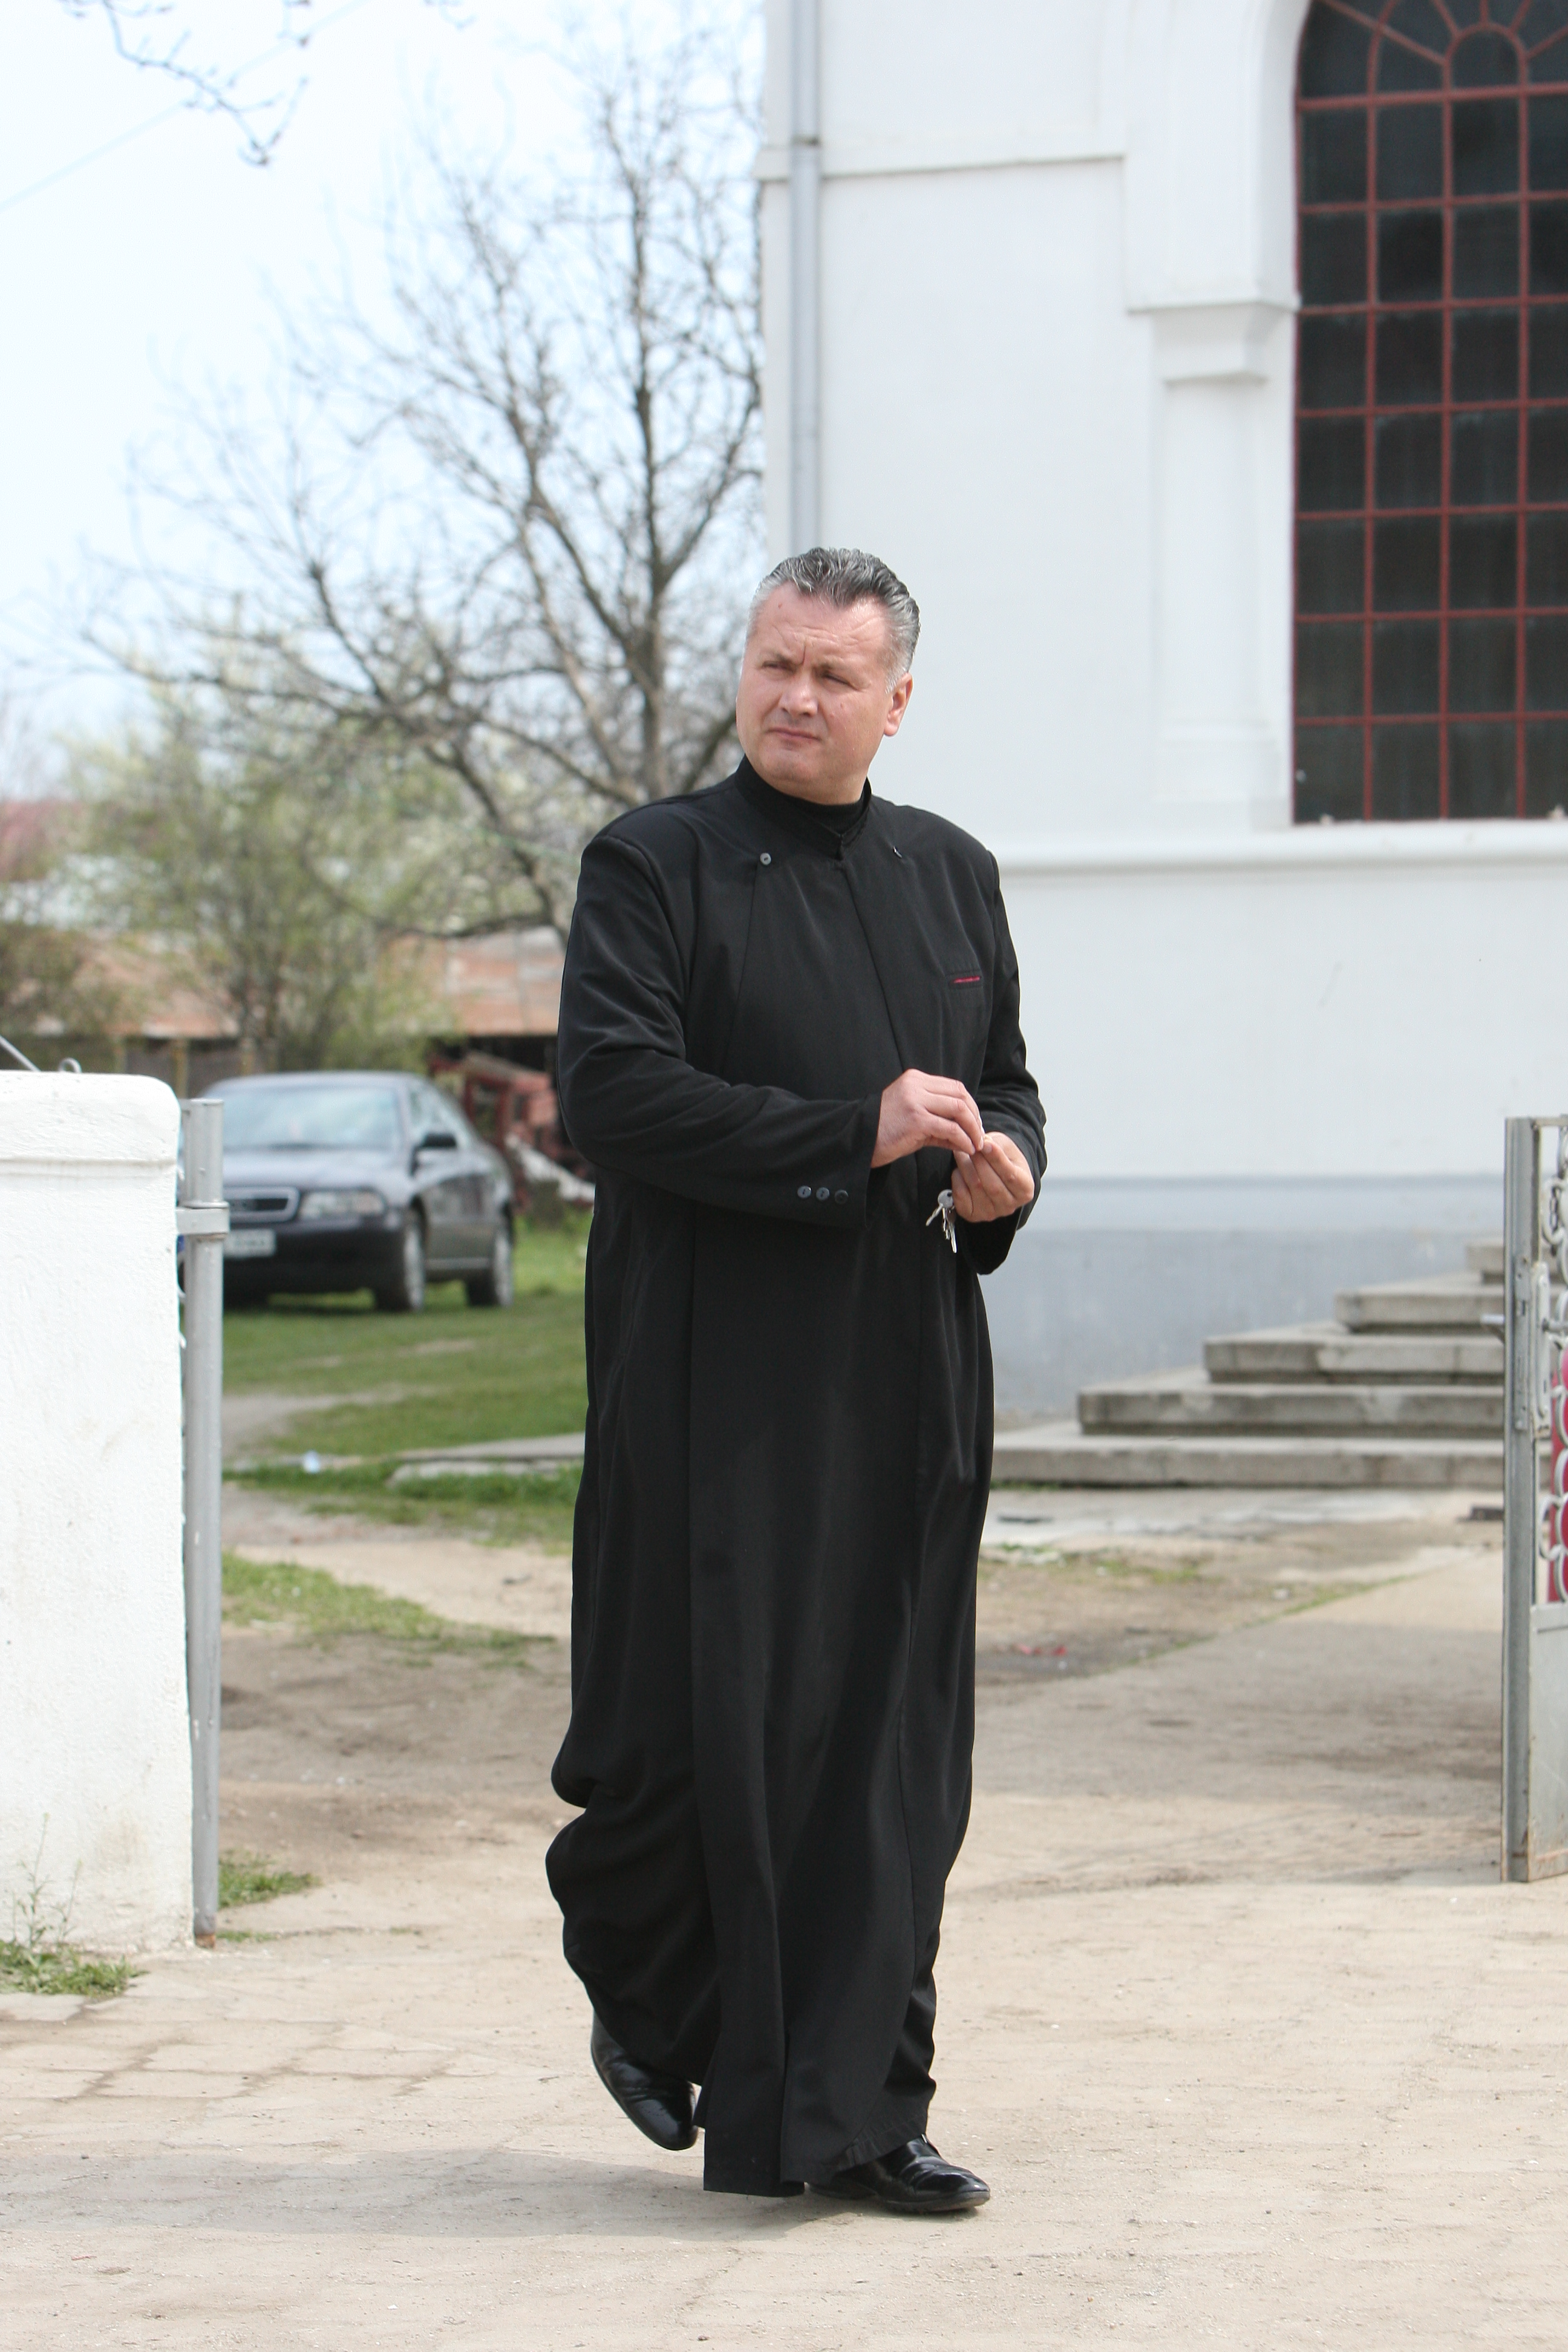 Parintele Robertino Oprea slujeste la biserica Varasti, din Giurgiu